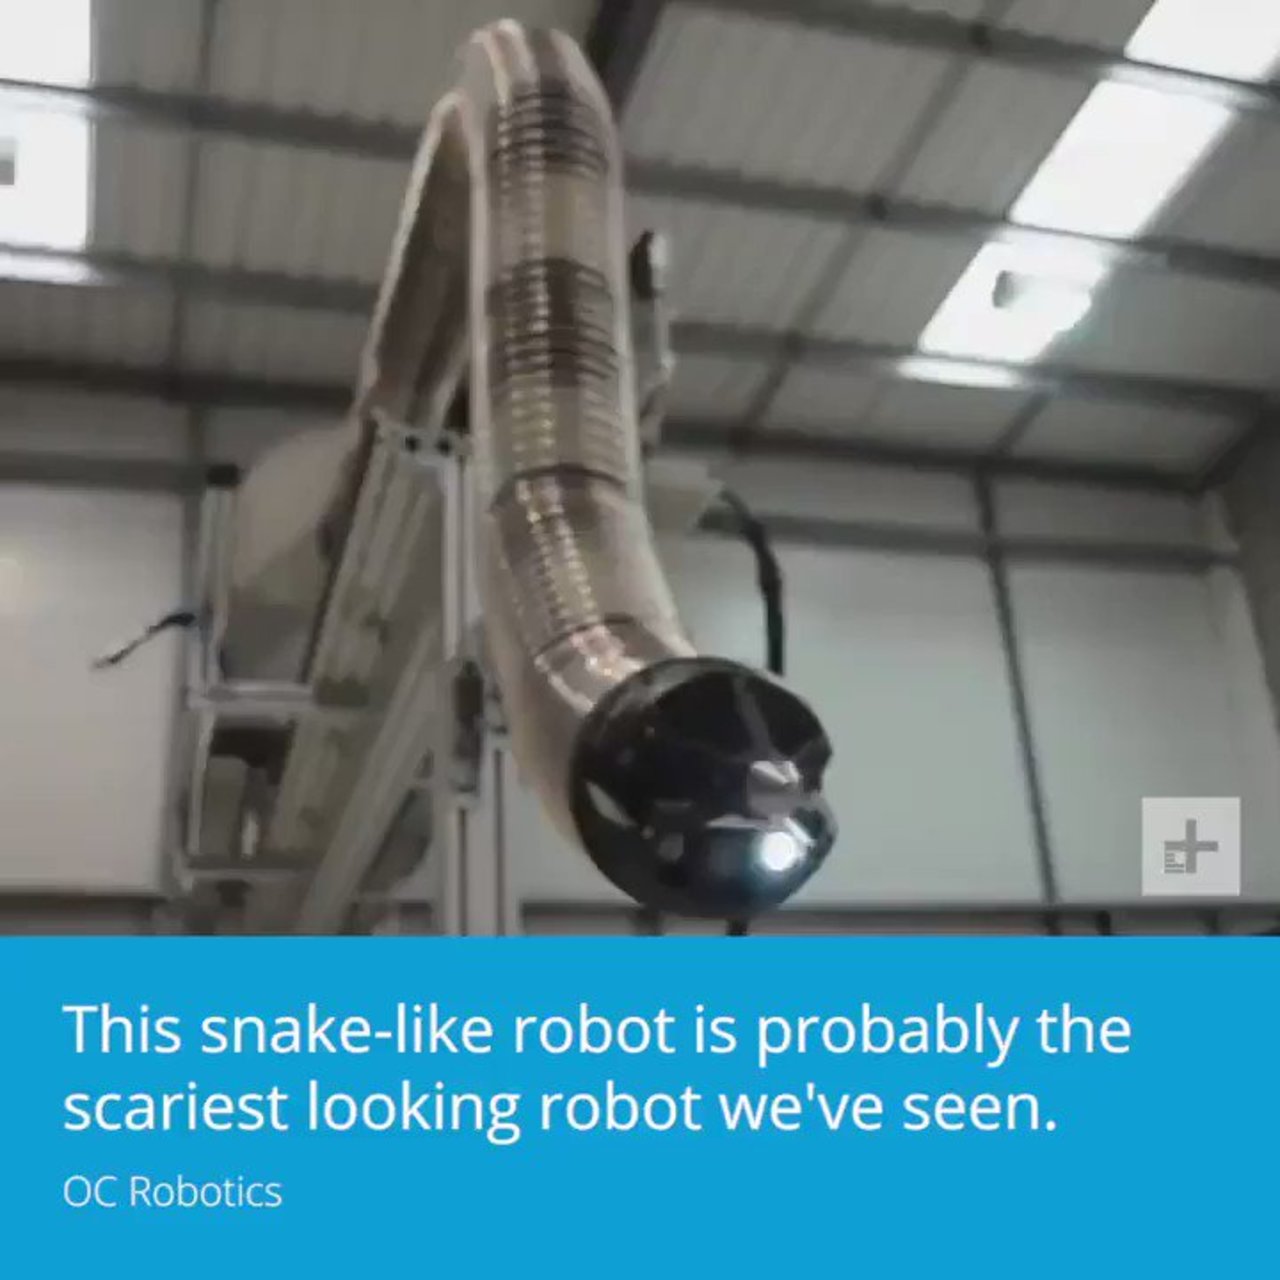 This snake-like #Robot probably the scariest looking robot we've seen by @DigitalTrends #MI #Robotics #AI #Tech #Innovation #EmergingTech Cc: @pawlowskimario @enricomolinari https://t.co/D5dLN4mpfD